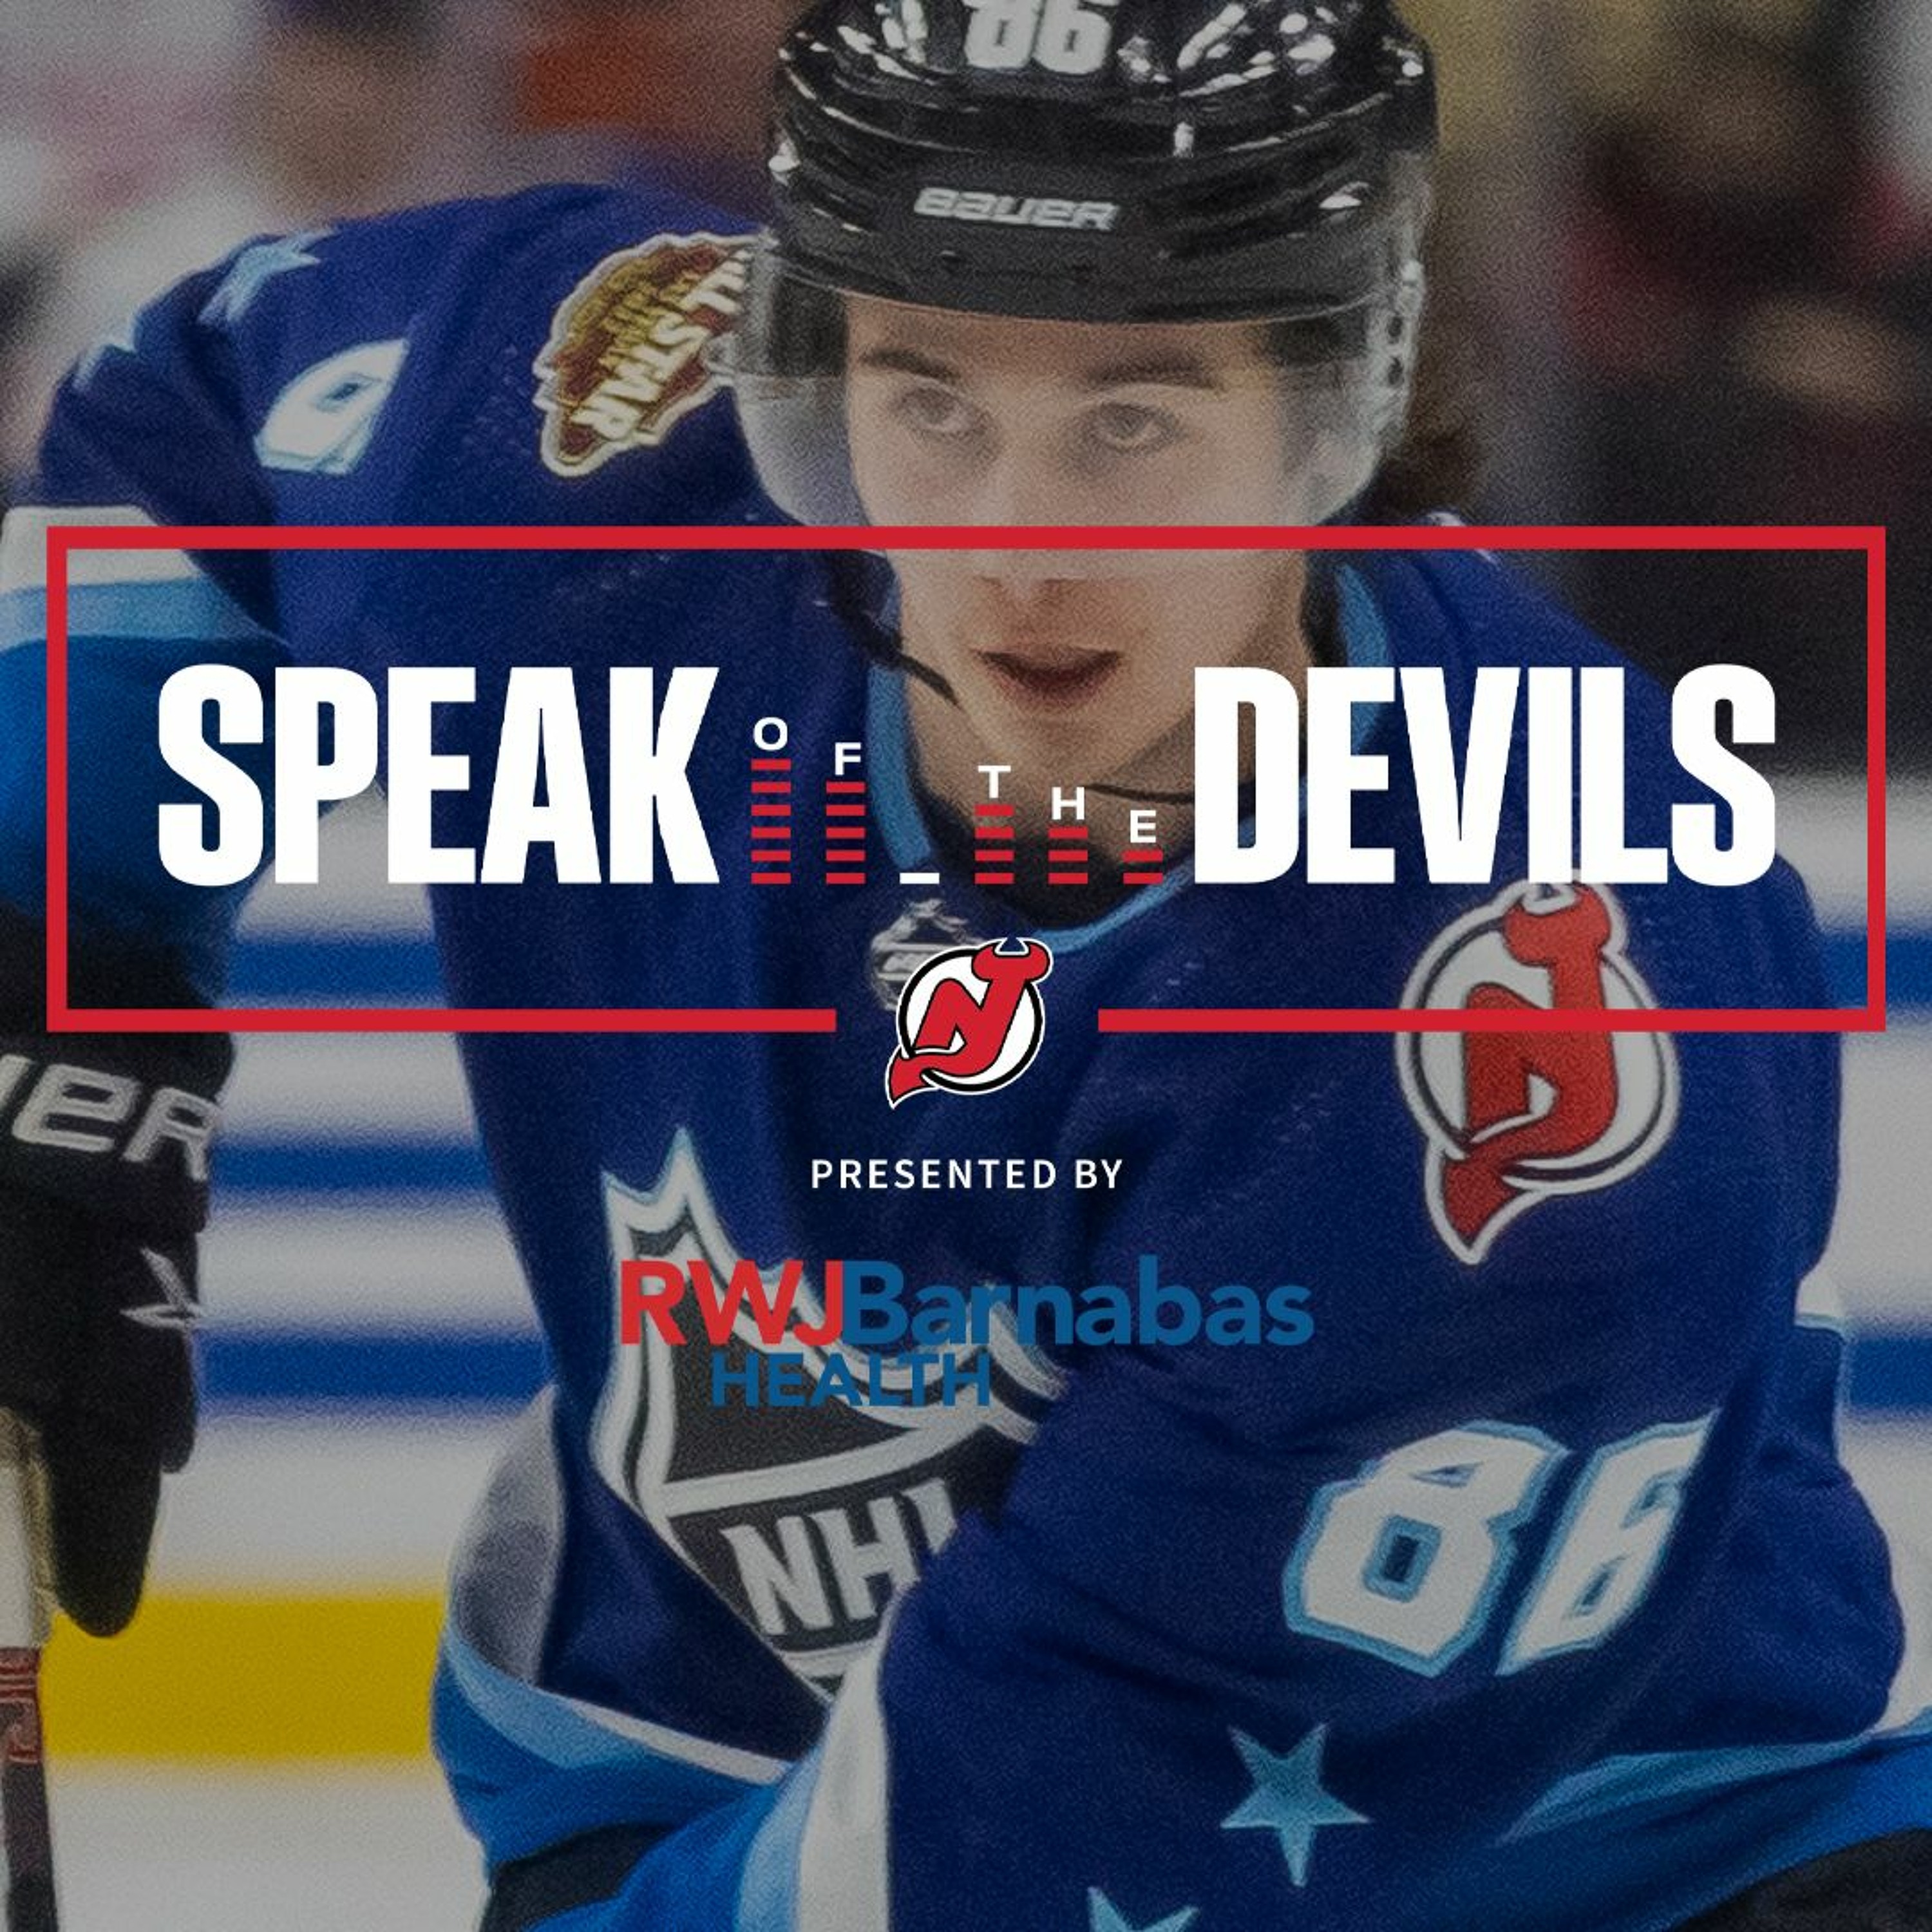 Jack Hughes | Speak of the Devils